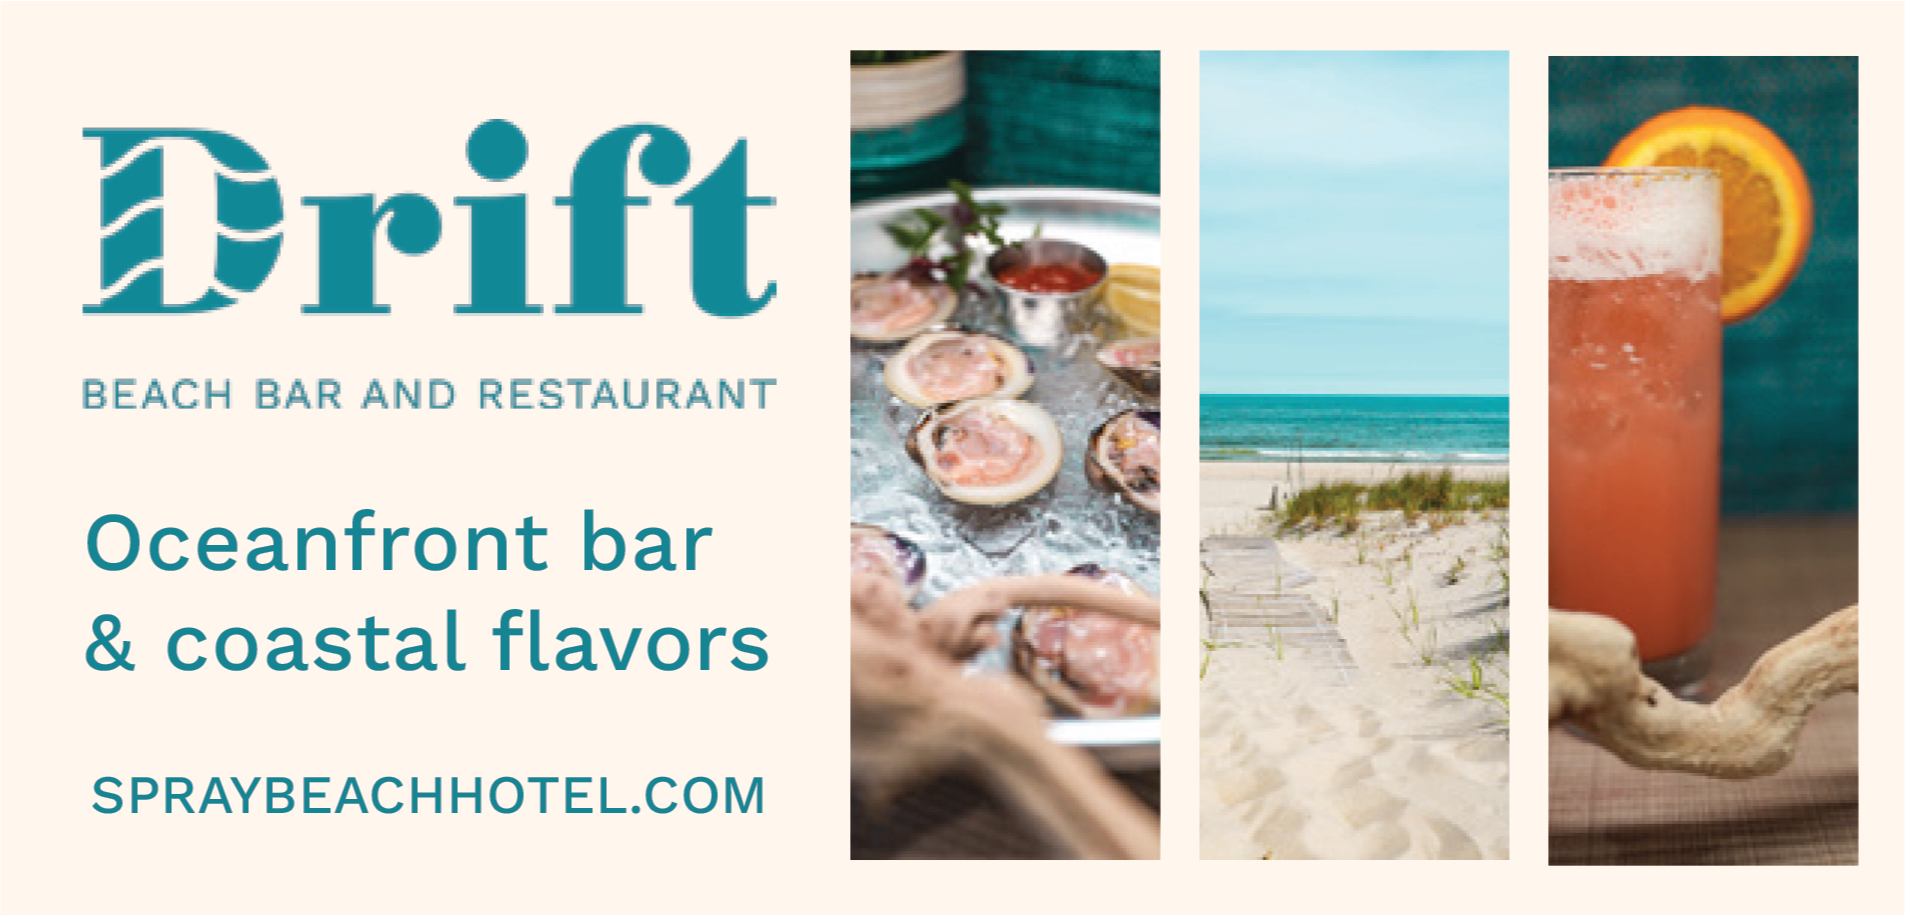 Drift Bar & Restaurant Print Ad